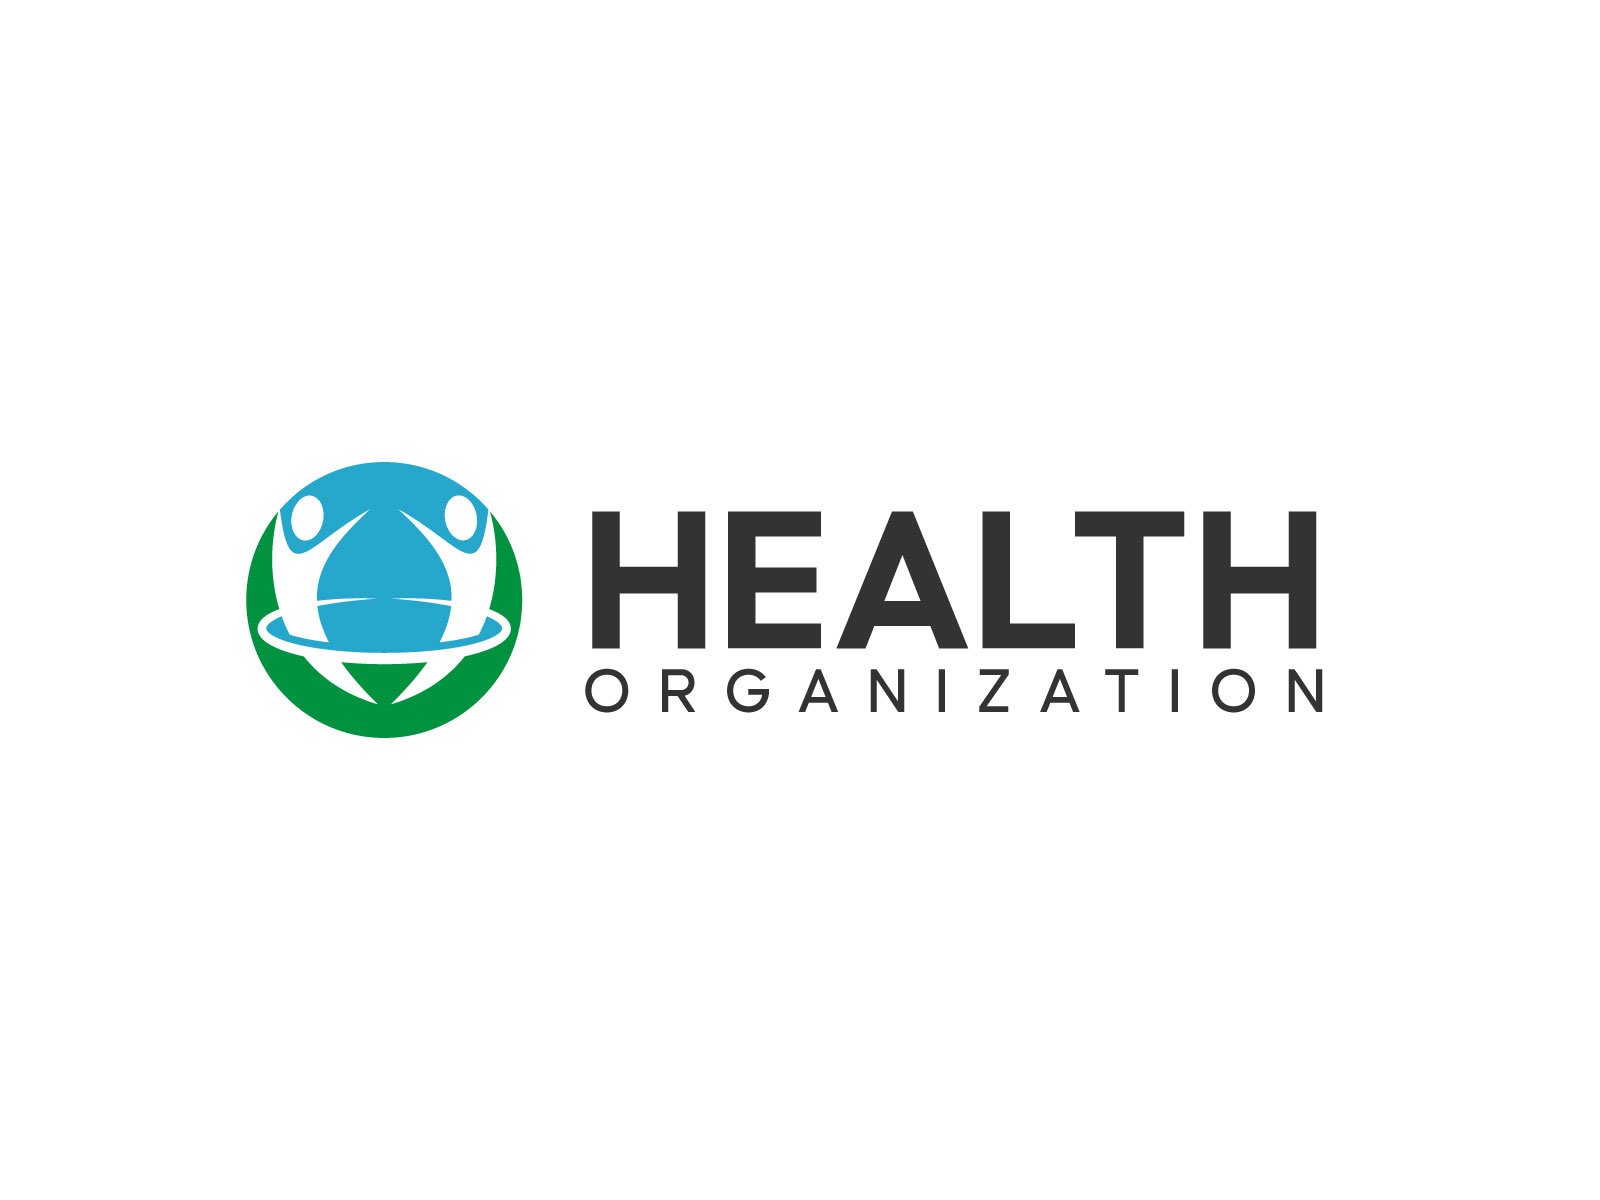 Health Organization Logo cover image.